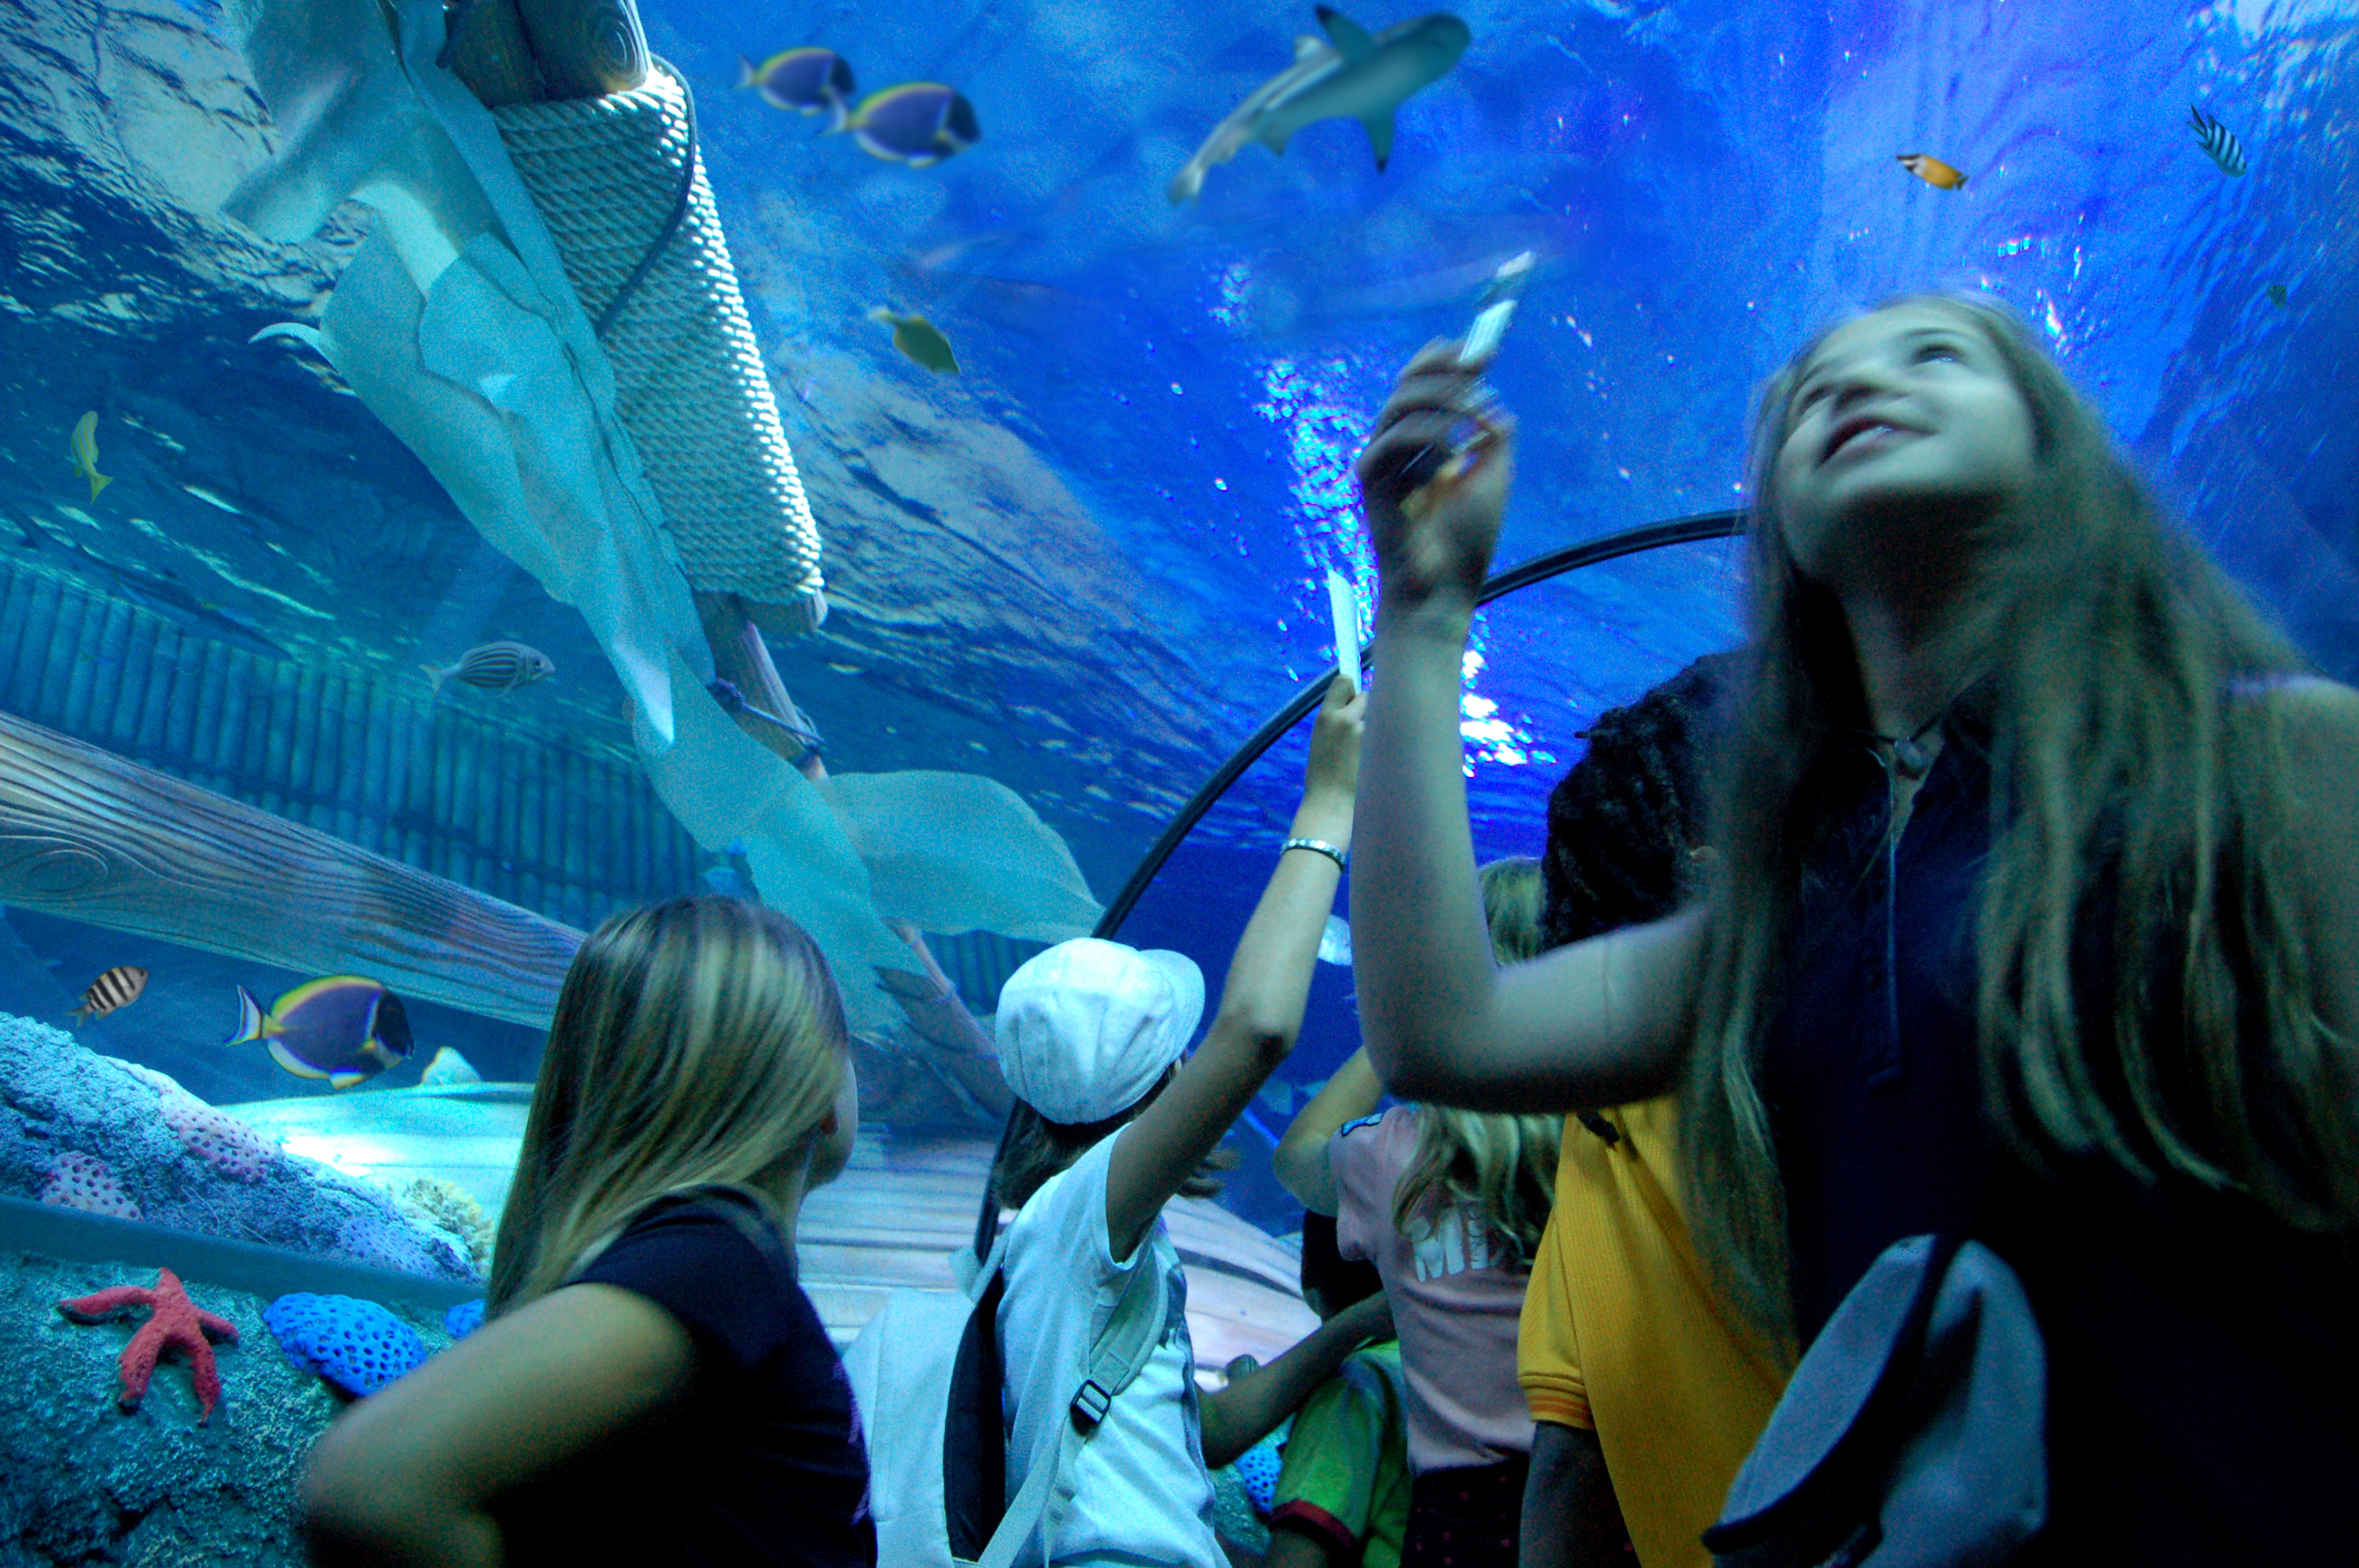 Gardaland SEA LIFE Aquarium - Walk through the ocean tunnel